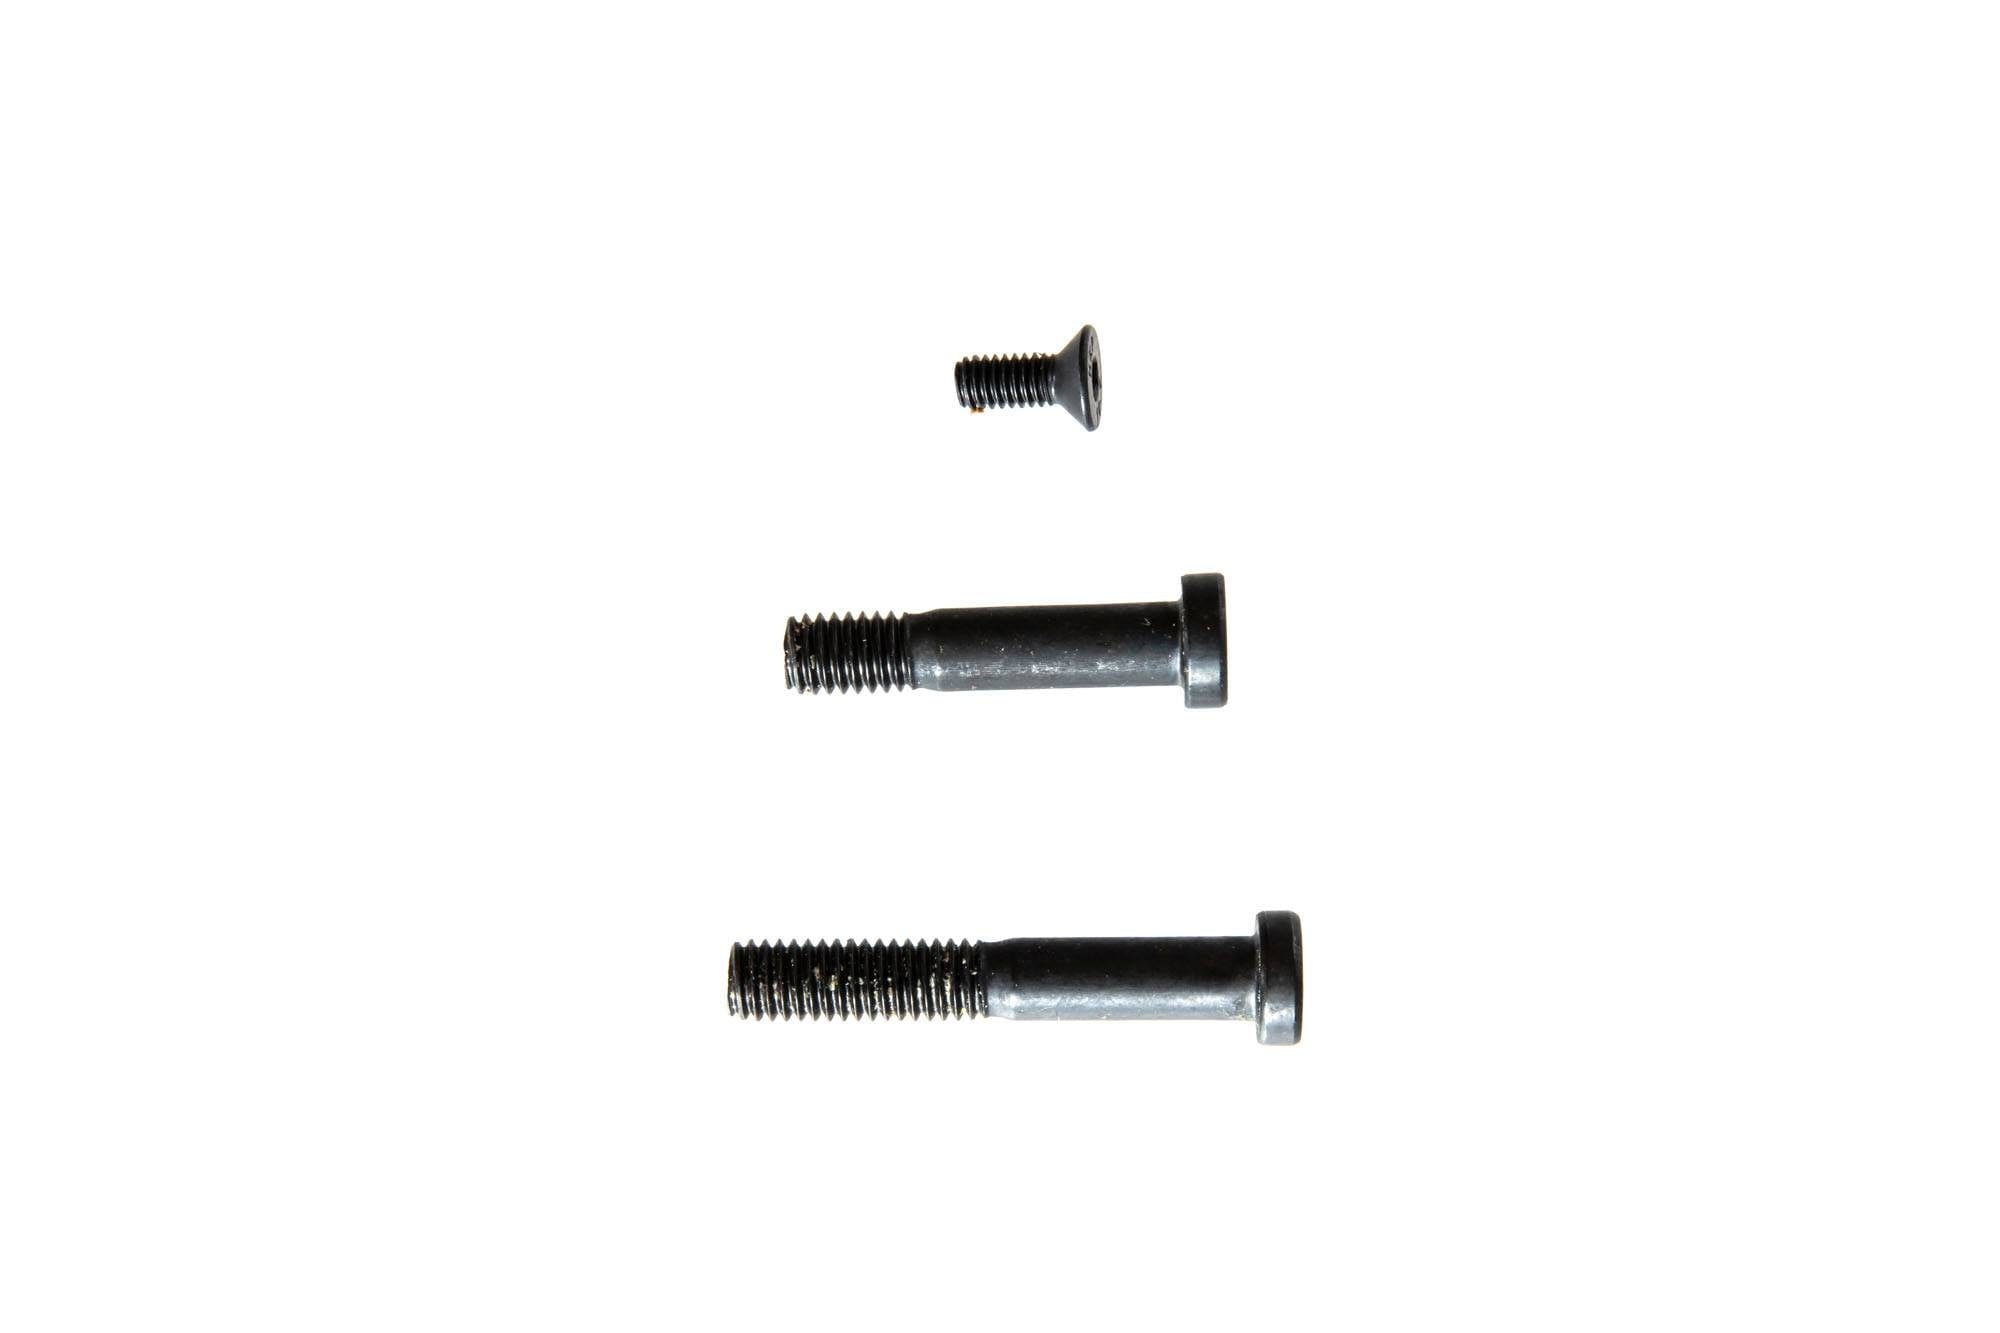 Mounting screw set for SA-S02/S03 replicas